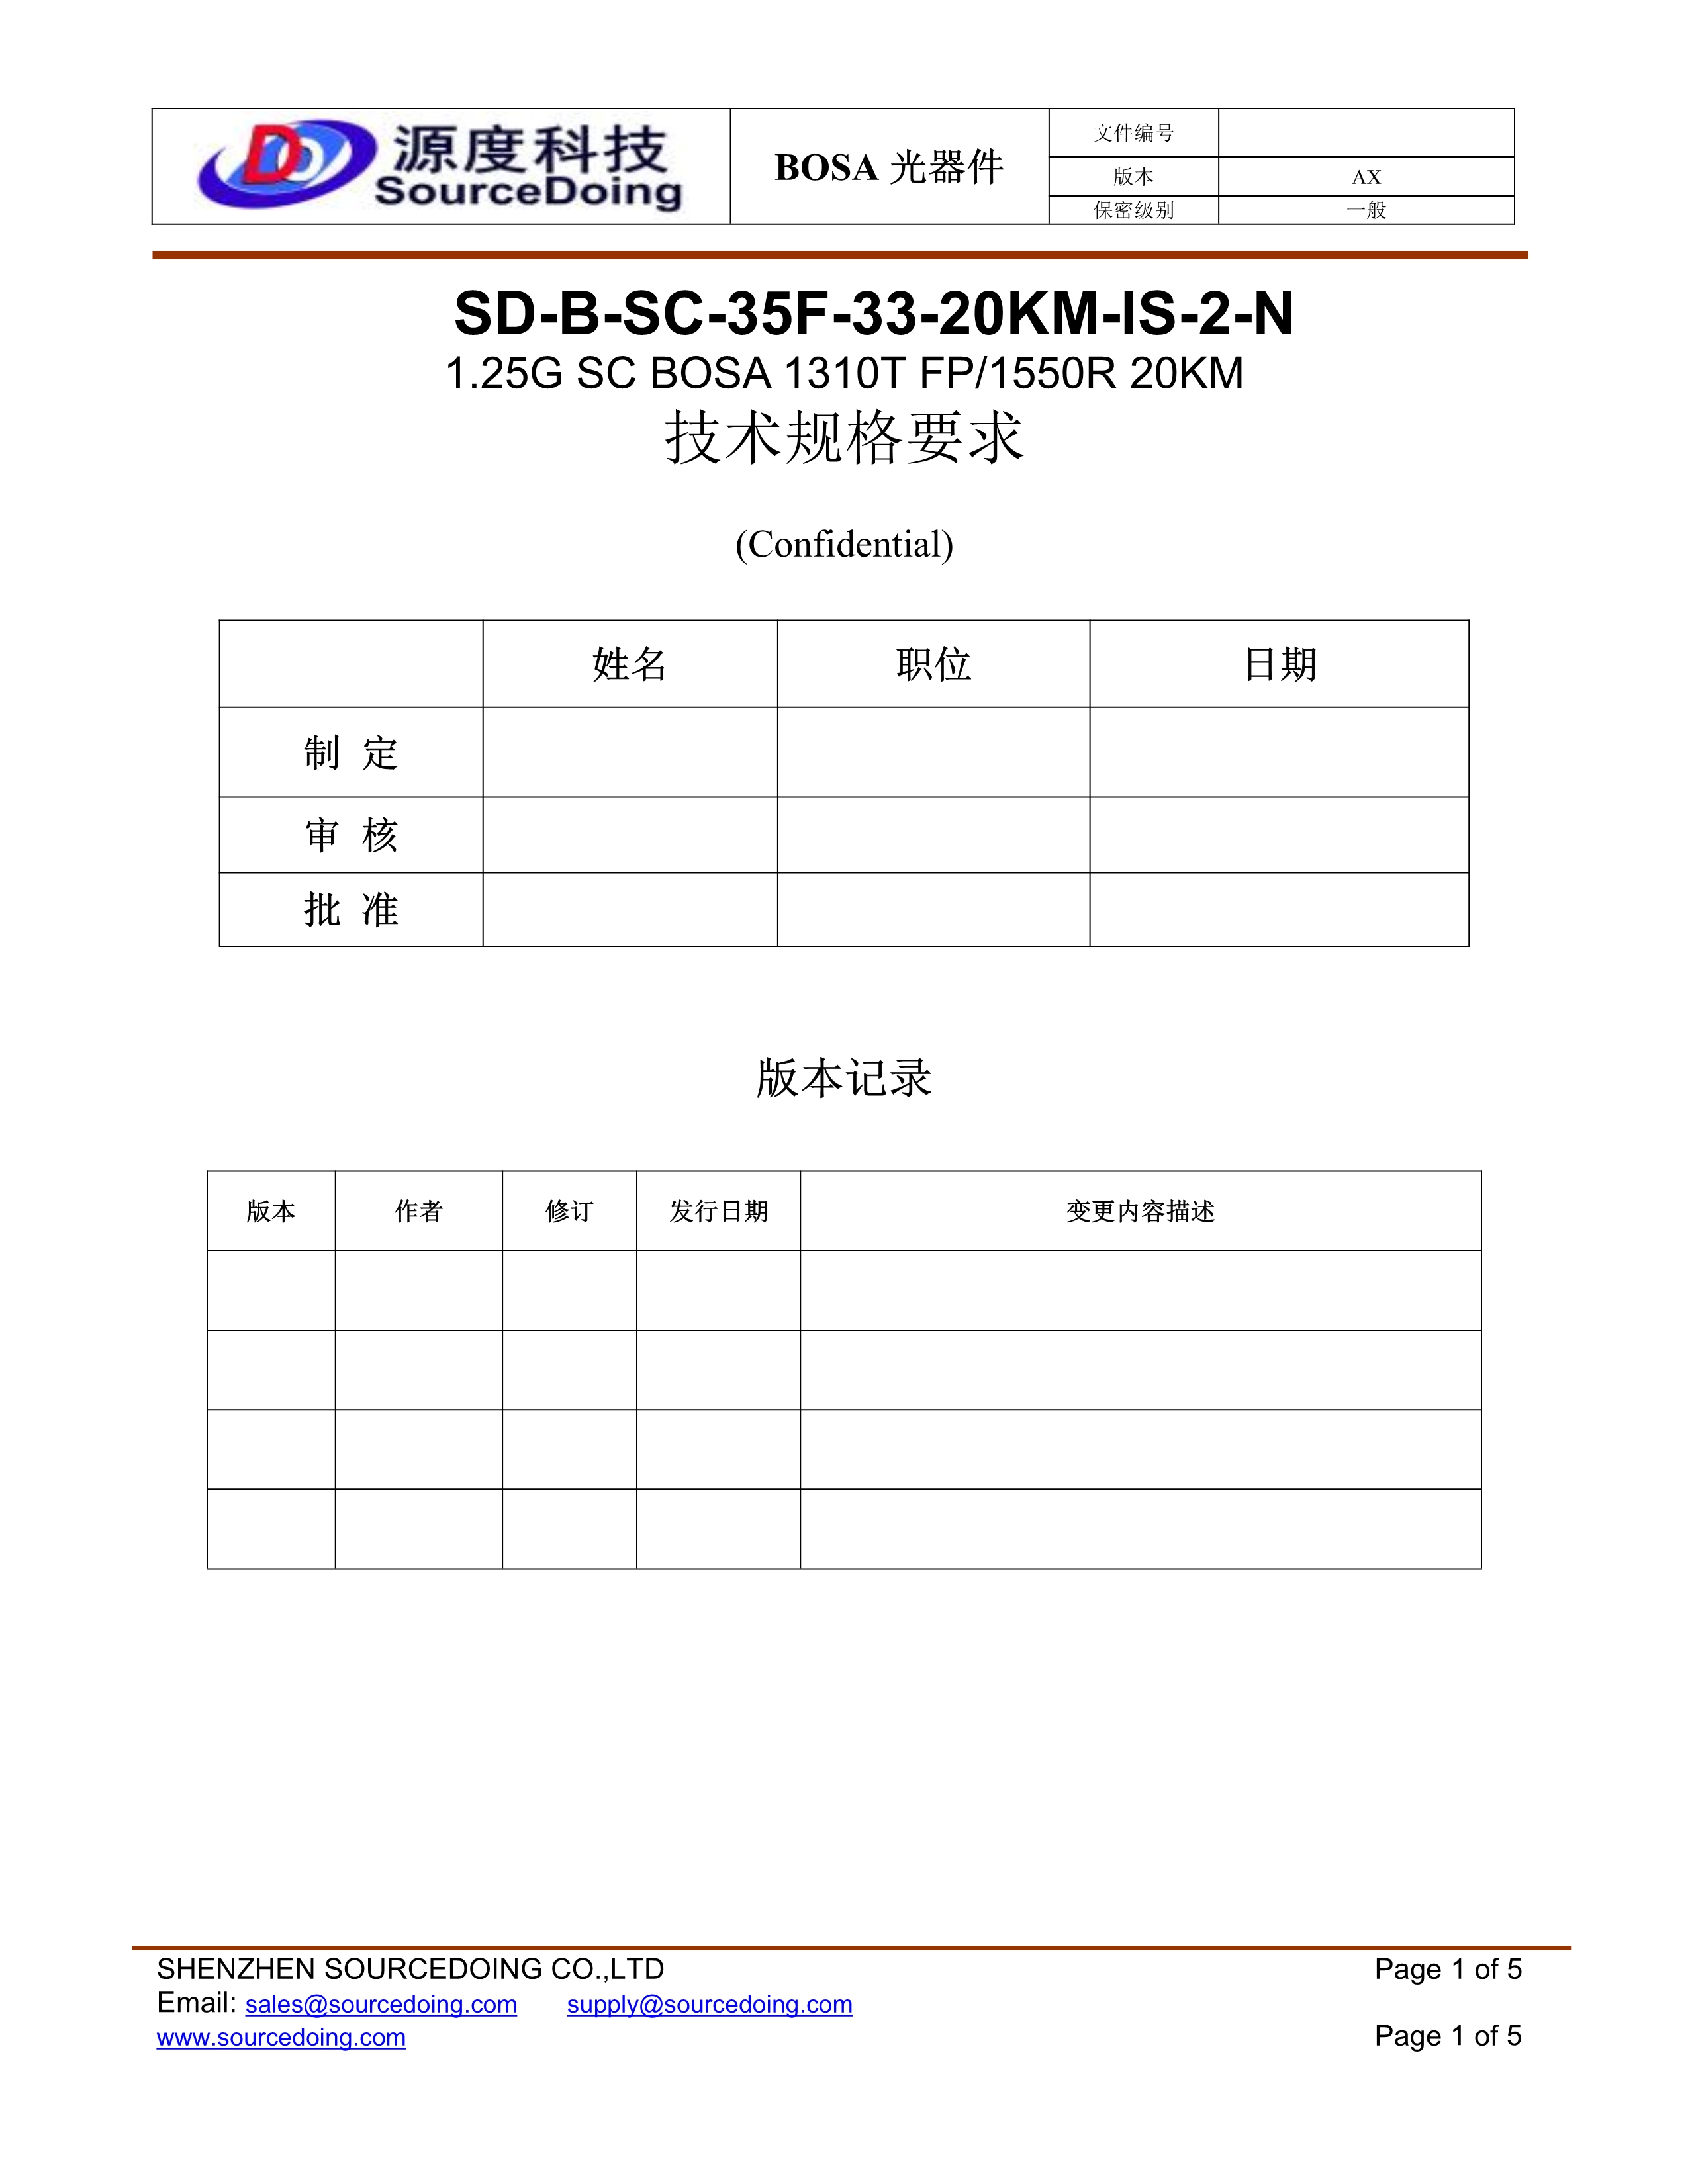 SD-B-SC-35F-33-20KM-IS-2-N(stevenli)_1.jpg